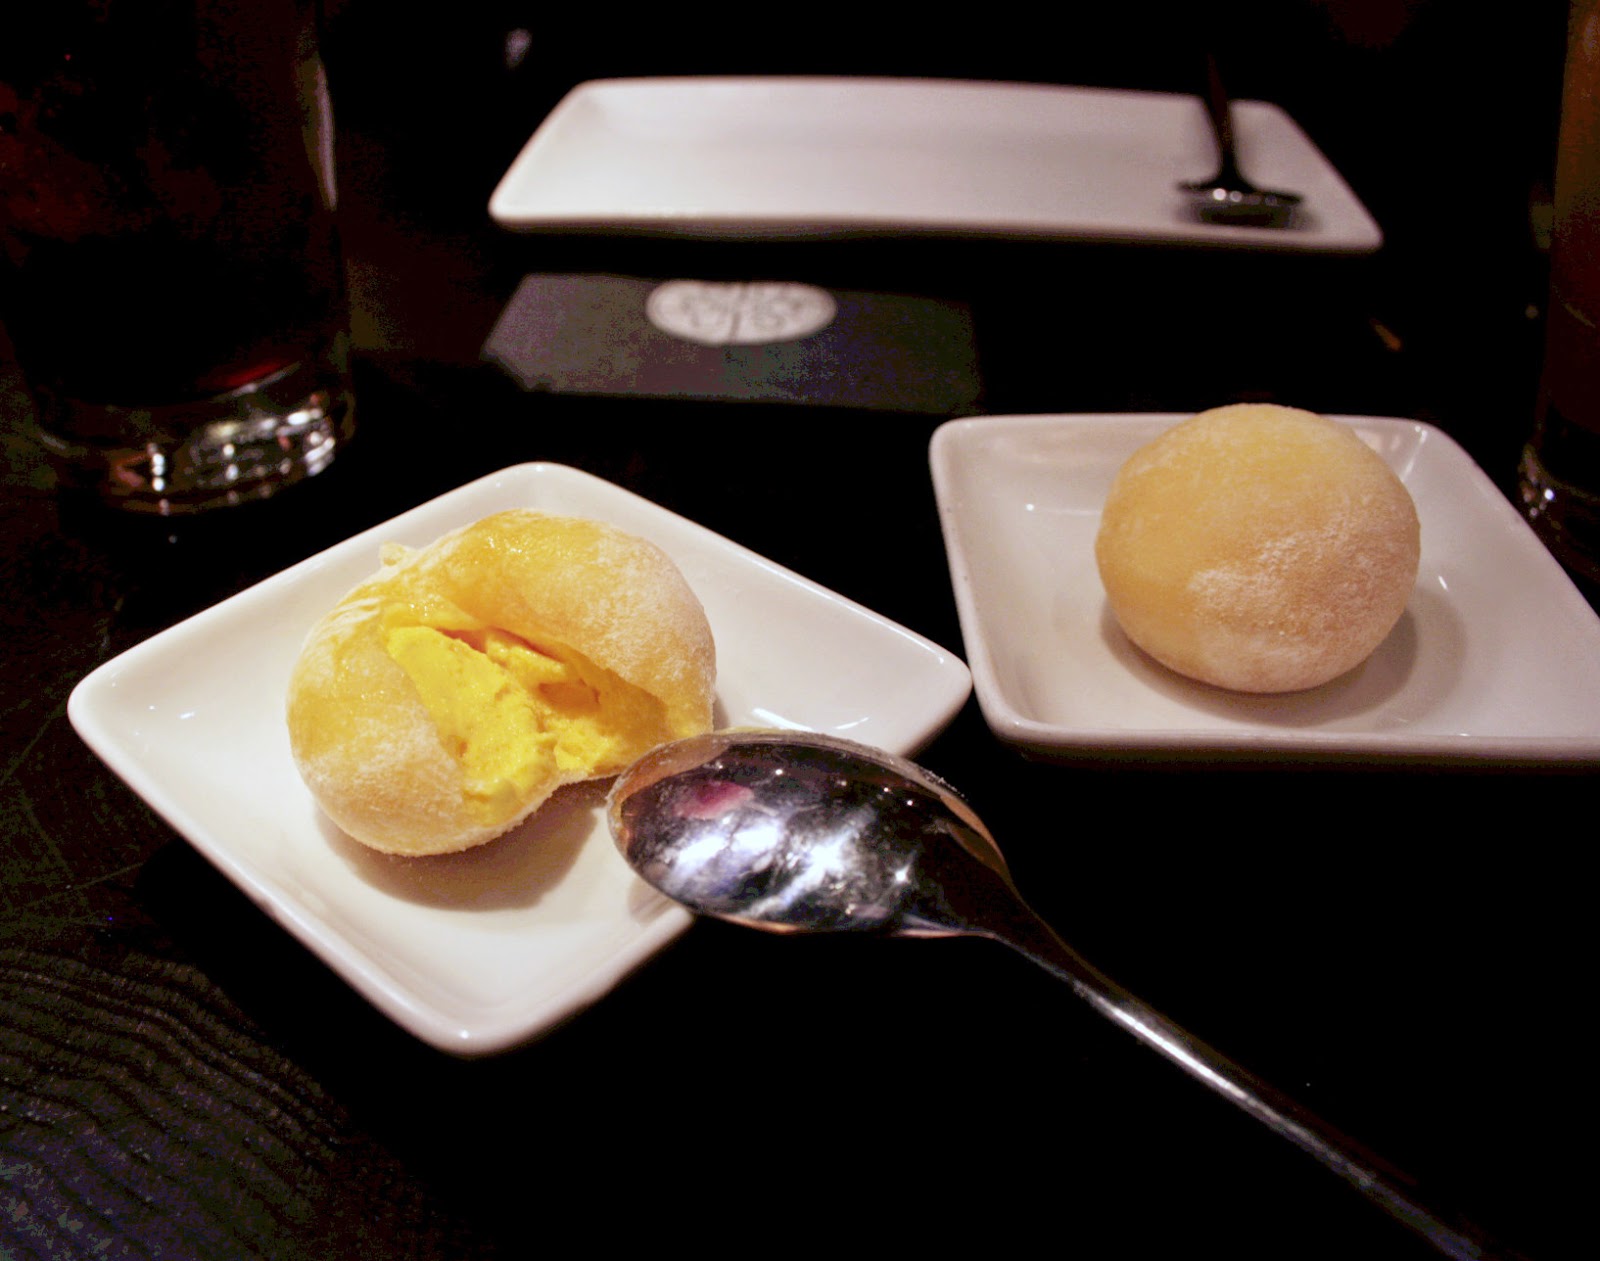 Yuzu and mango mochi at Ping Pong dim sum restaurant in Soho